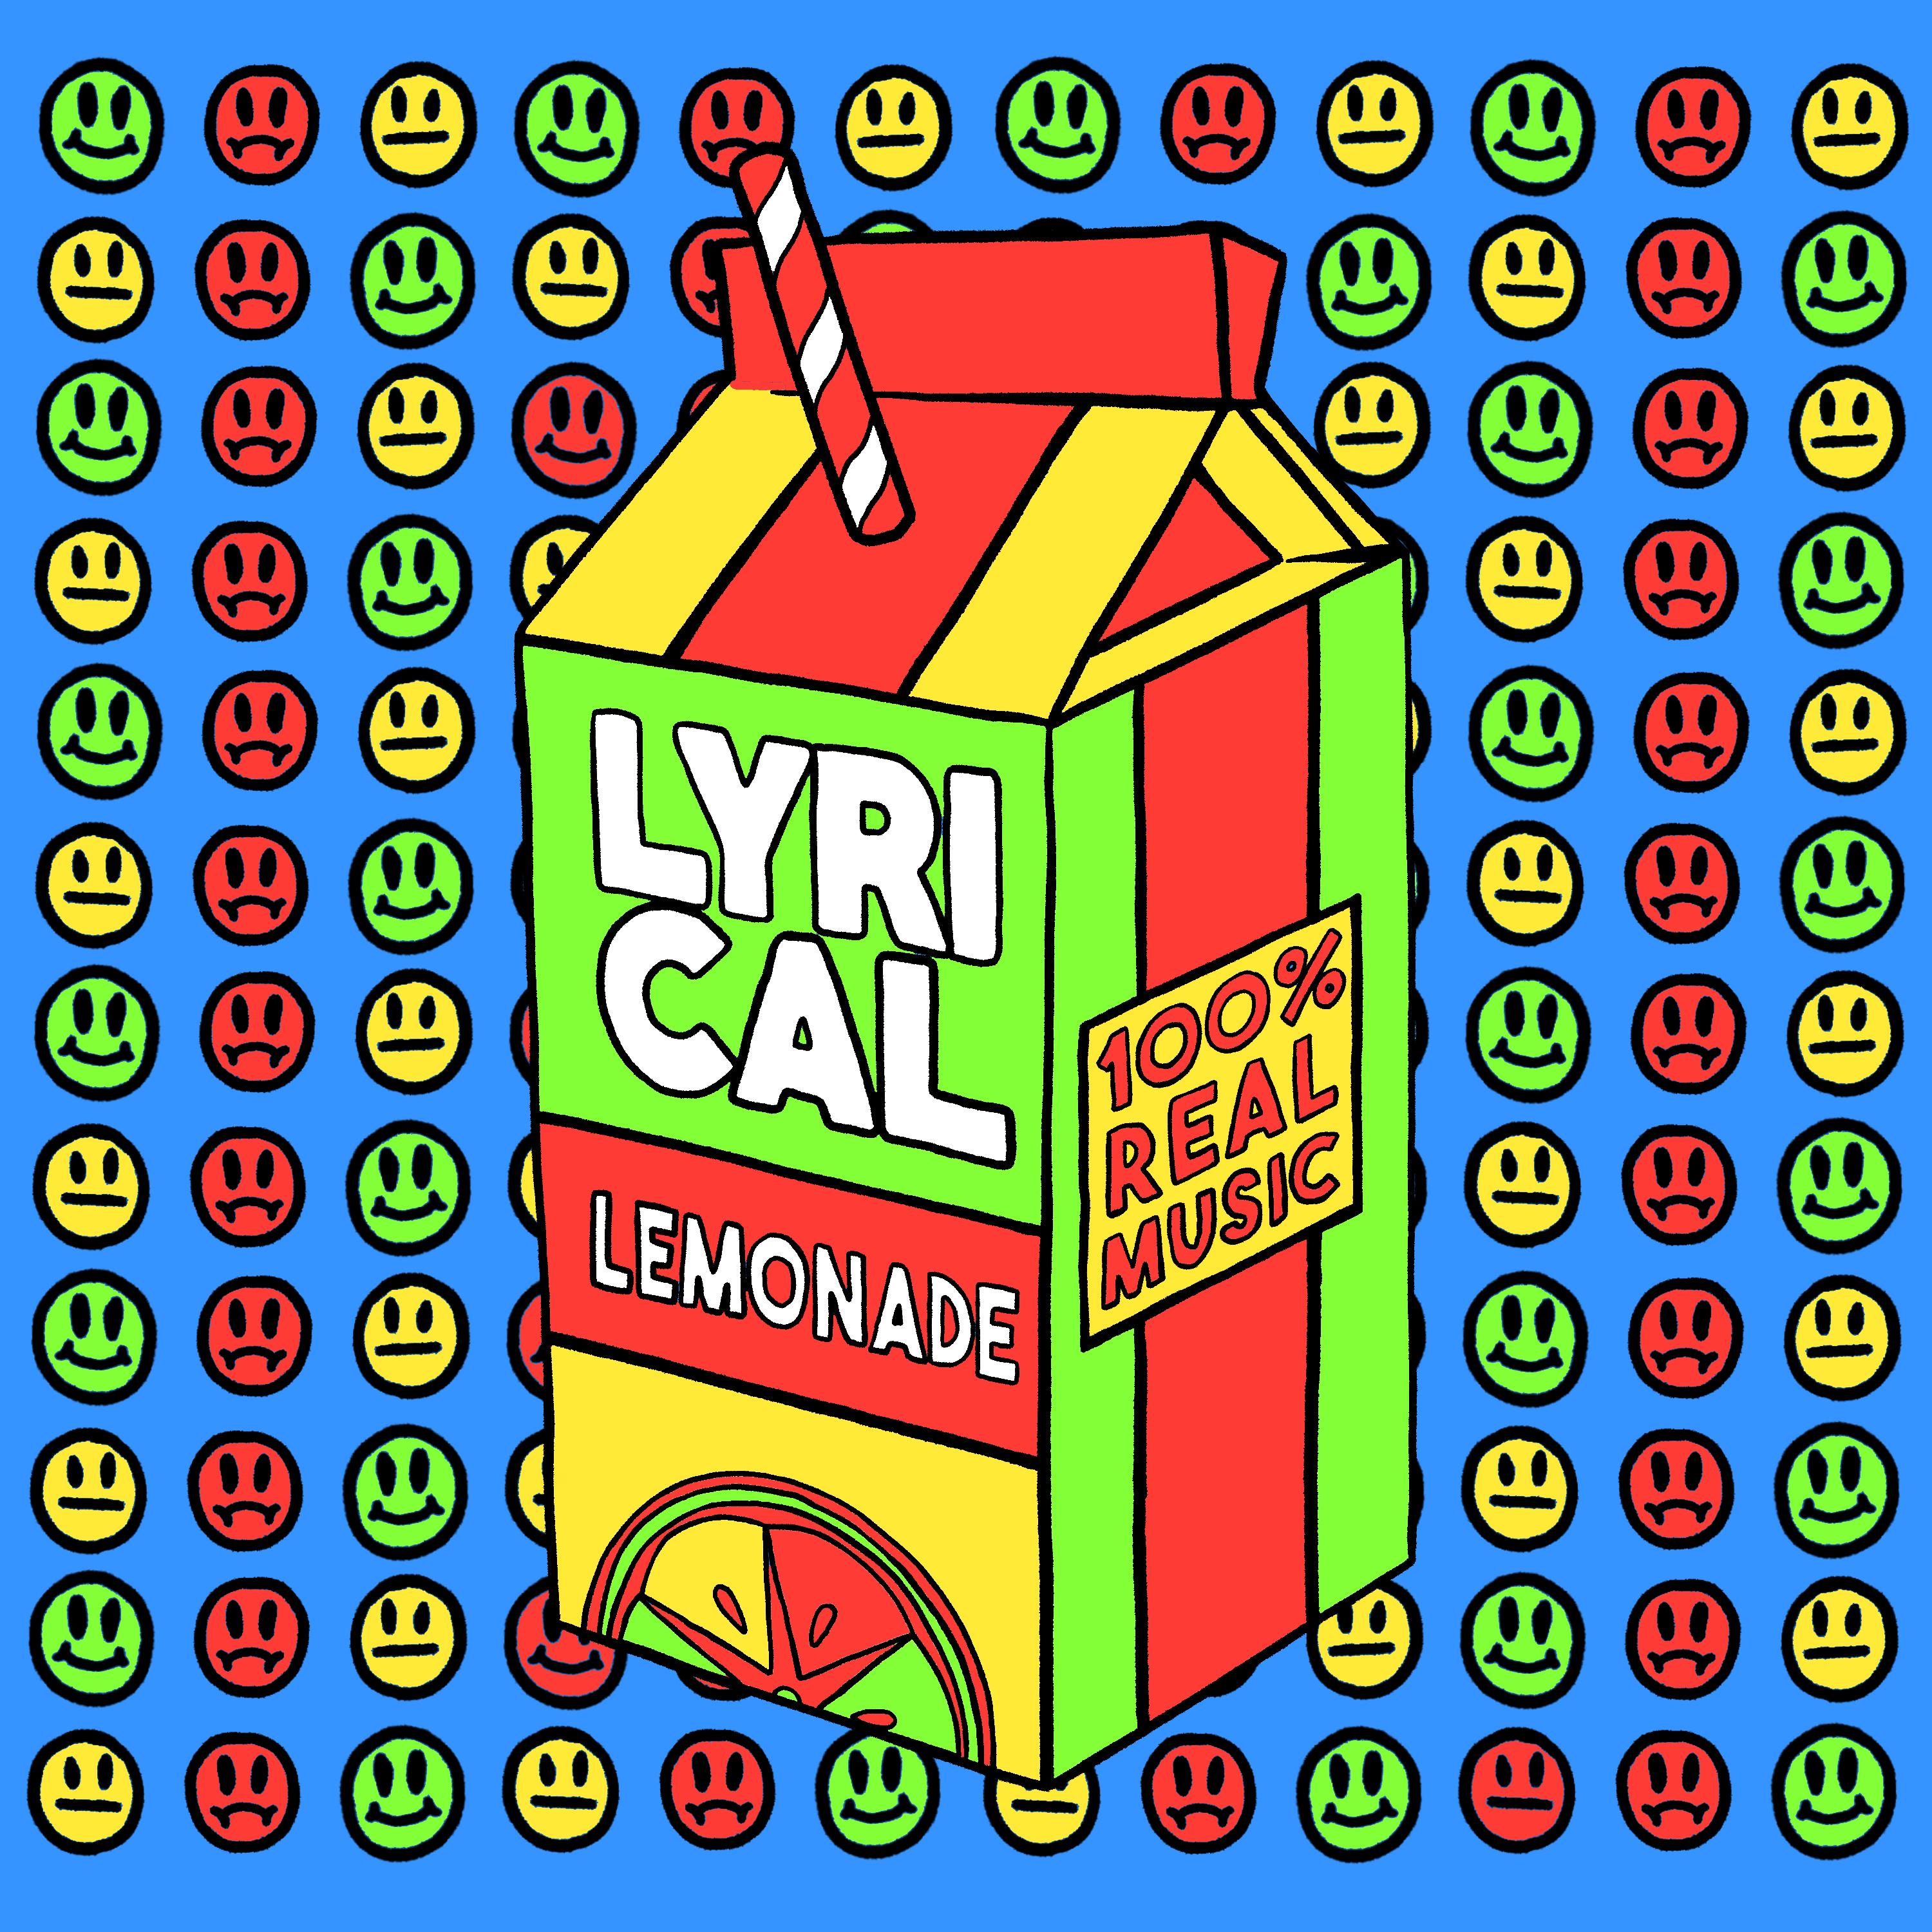 Lyrical Lemonade Carton #115